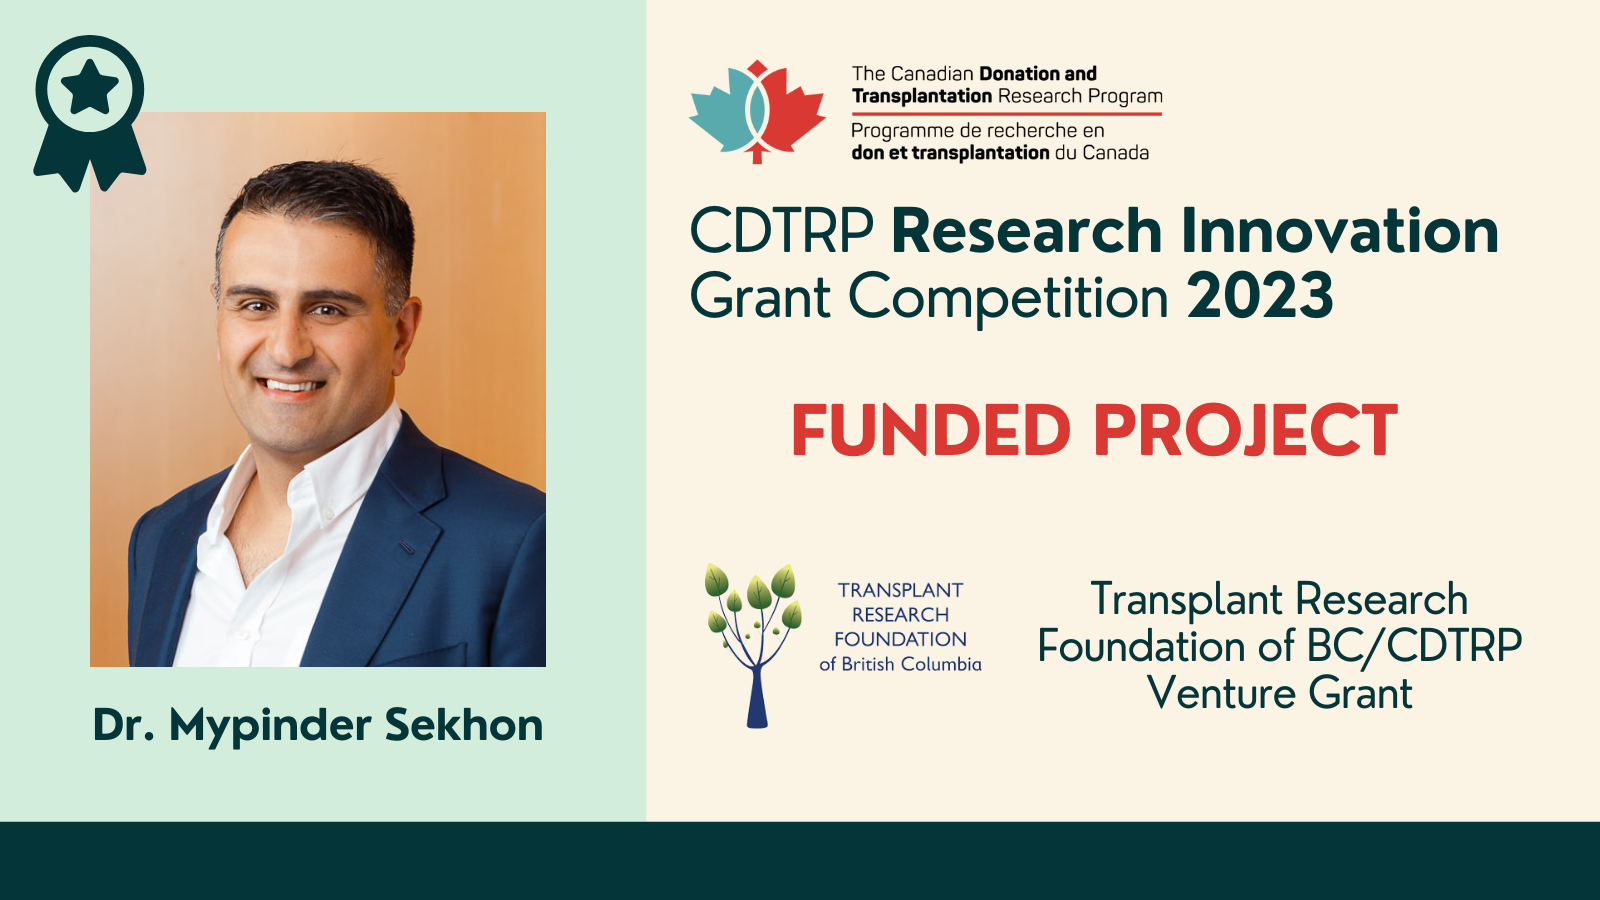 Transplant Research Foundation of BC/CDTRP Venture Grant: Dr. Mypinder  Sekhon – Canadian Donation and Transplantation Research Program